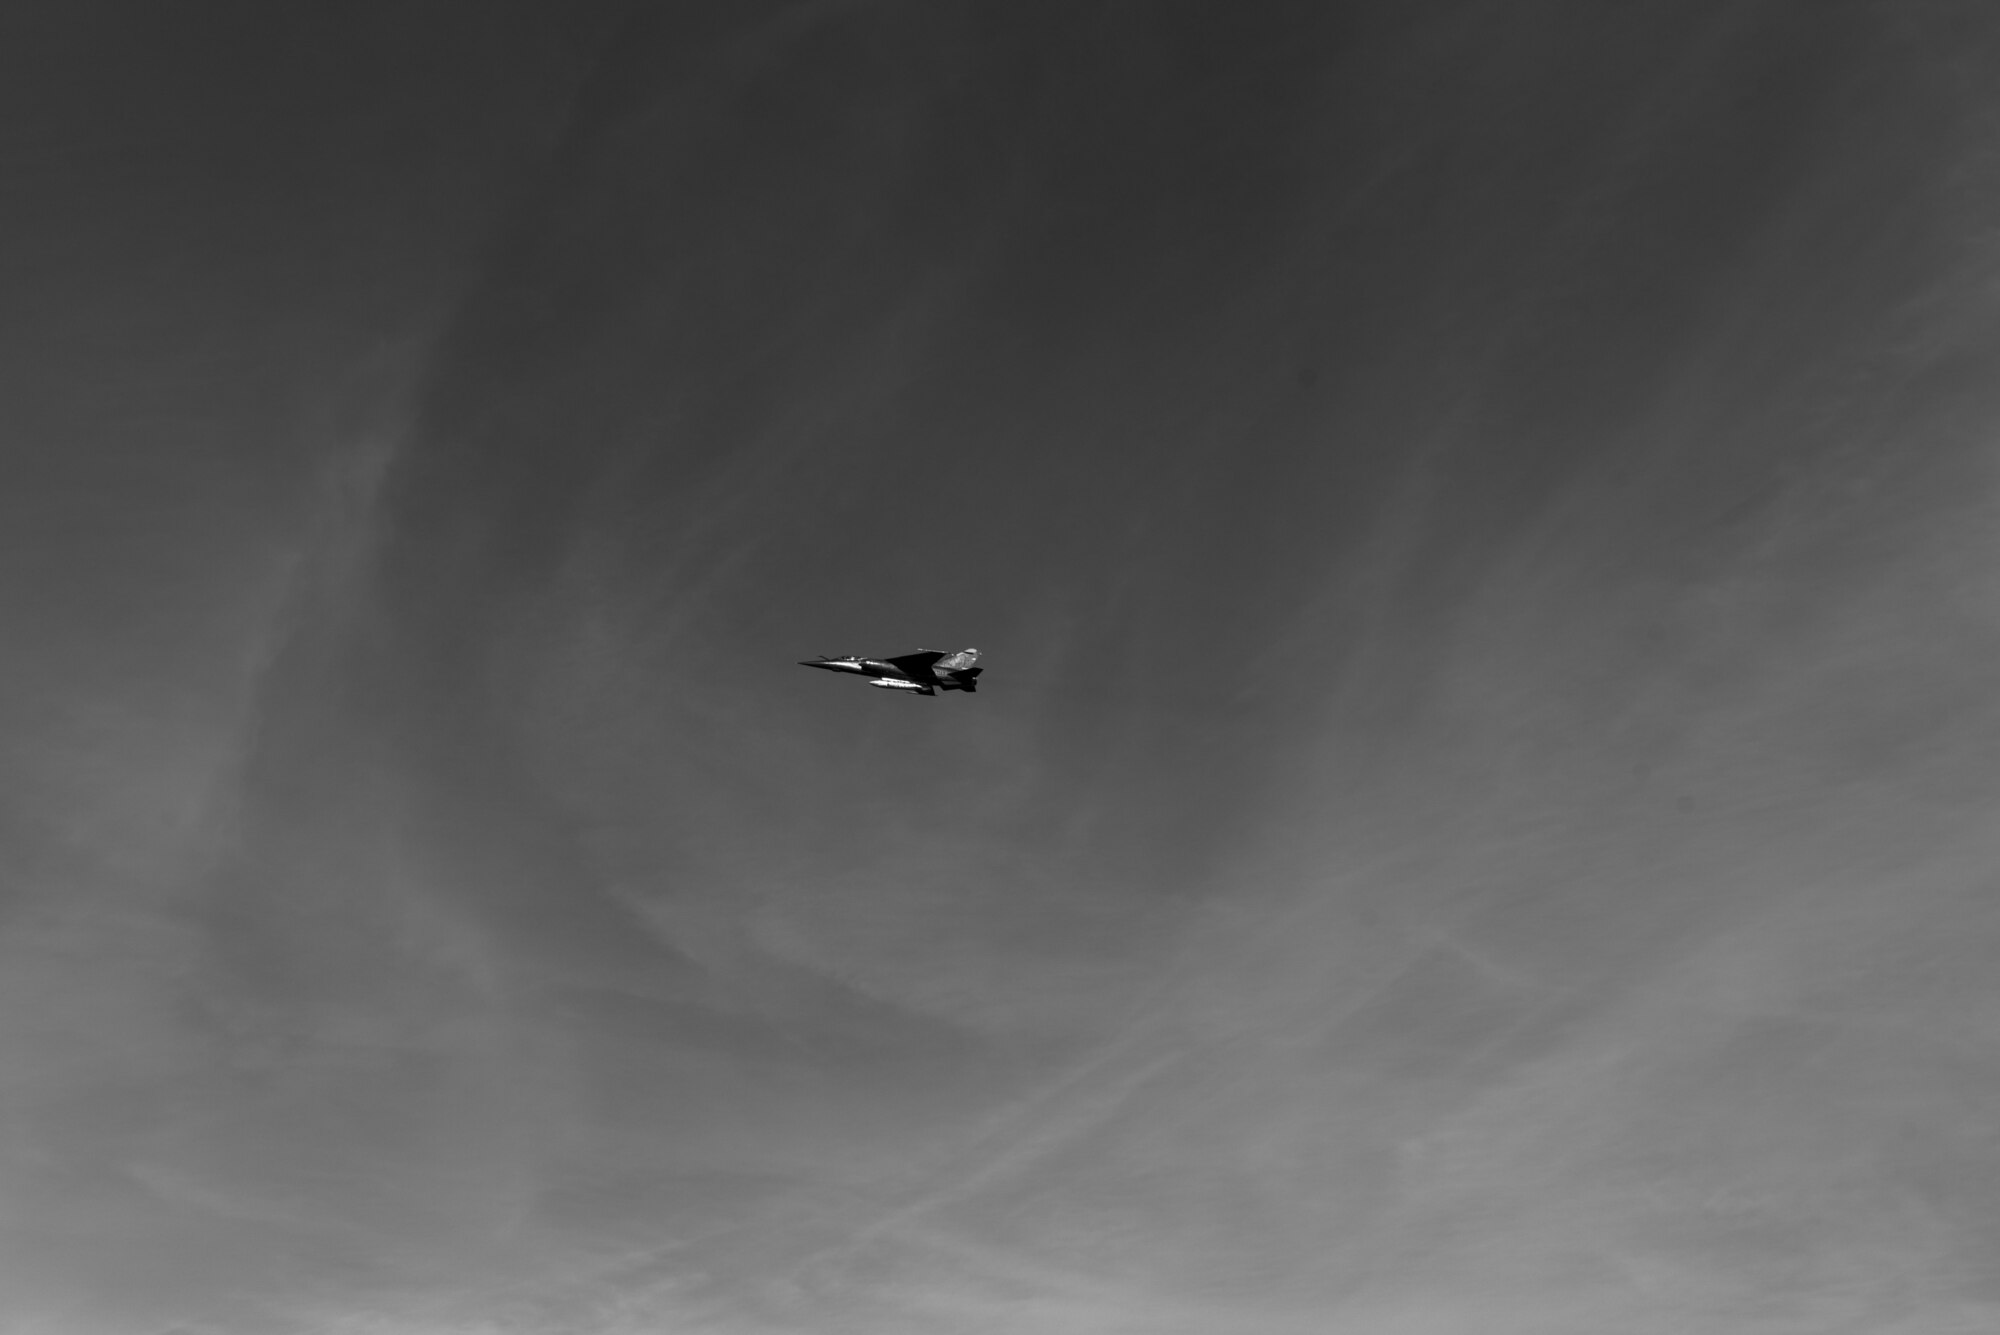 a plane in the air